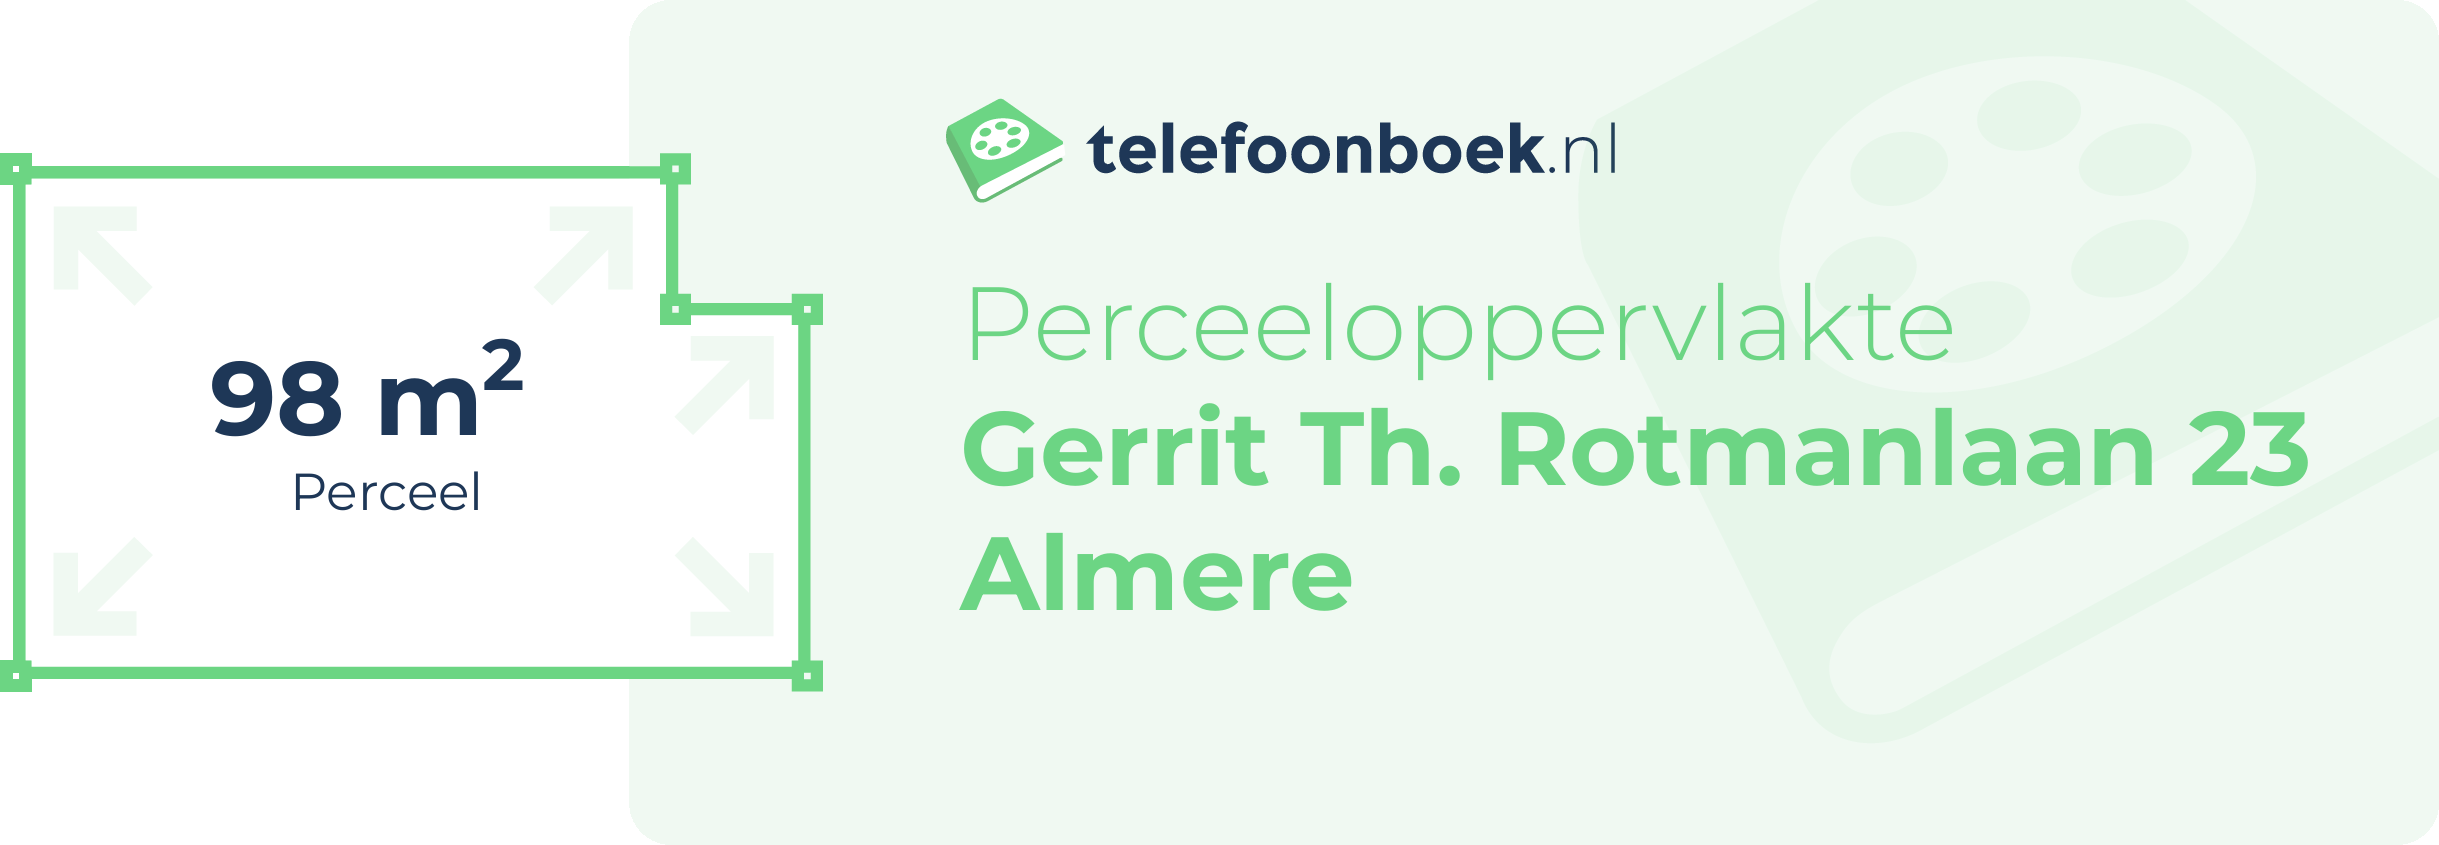 Perceeloppervlakte Gerrit Th. Rotmanlaan 23 Almere